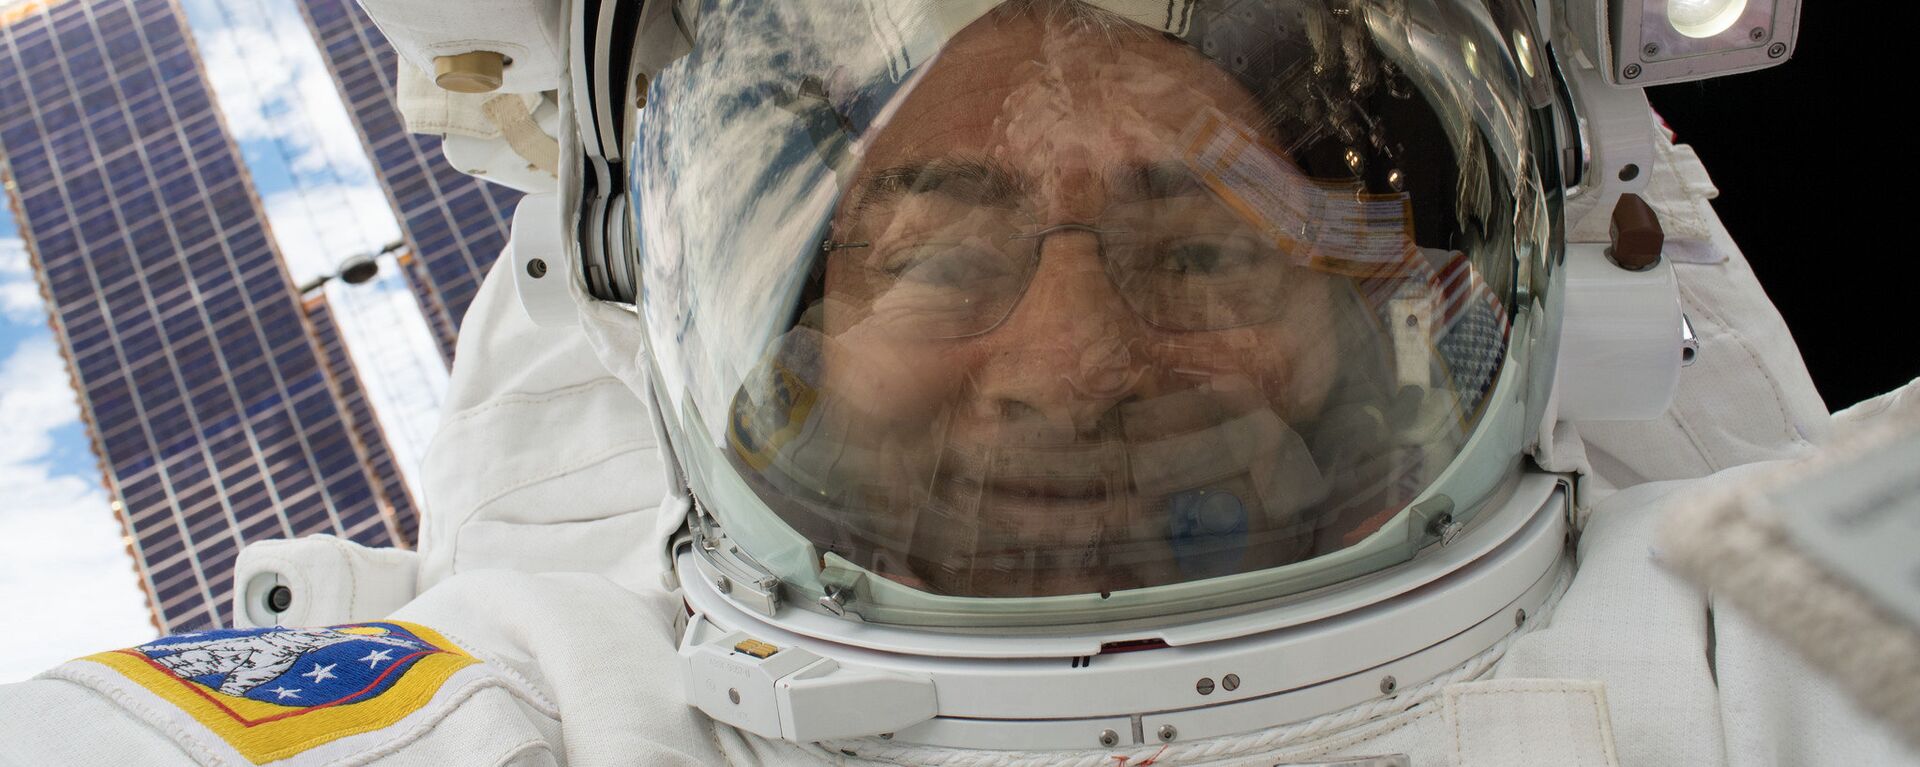 NASA astronaut Mark Vande Hei takes a space selfie during a spacewalk that took place on Jan. 23, 2018. - Sputnik International, 1920, 14.03.2022